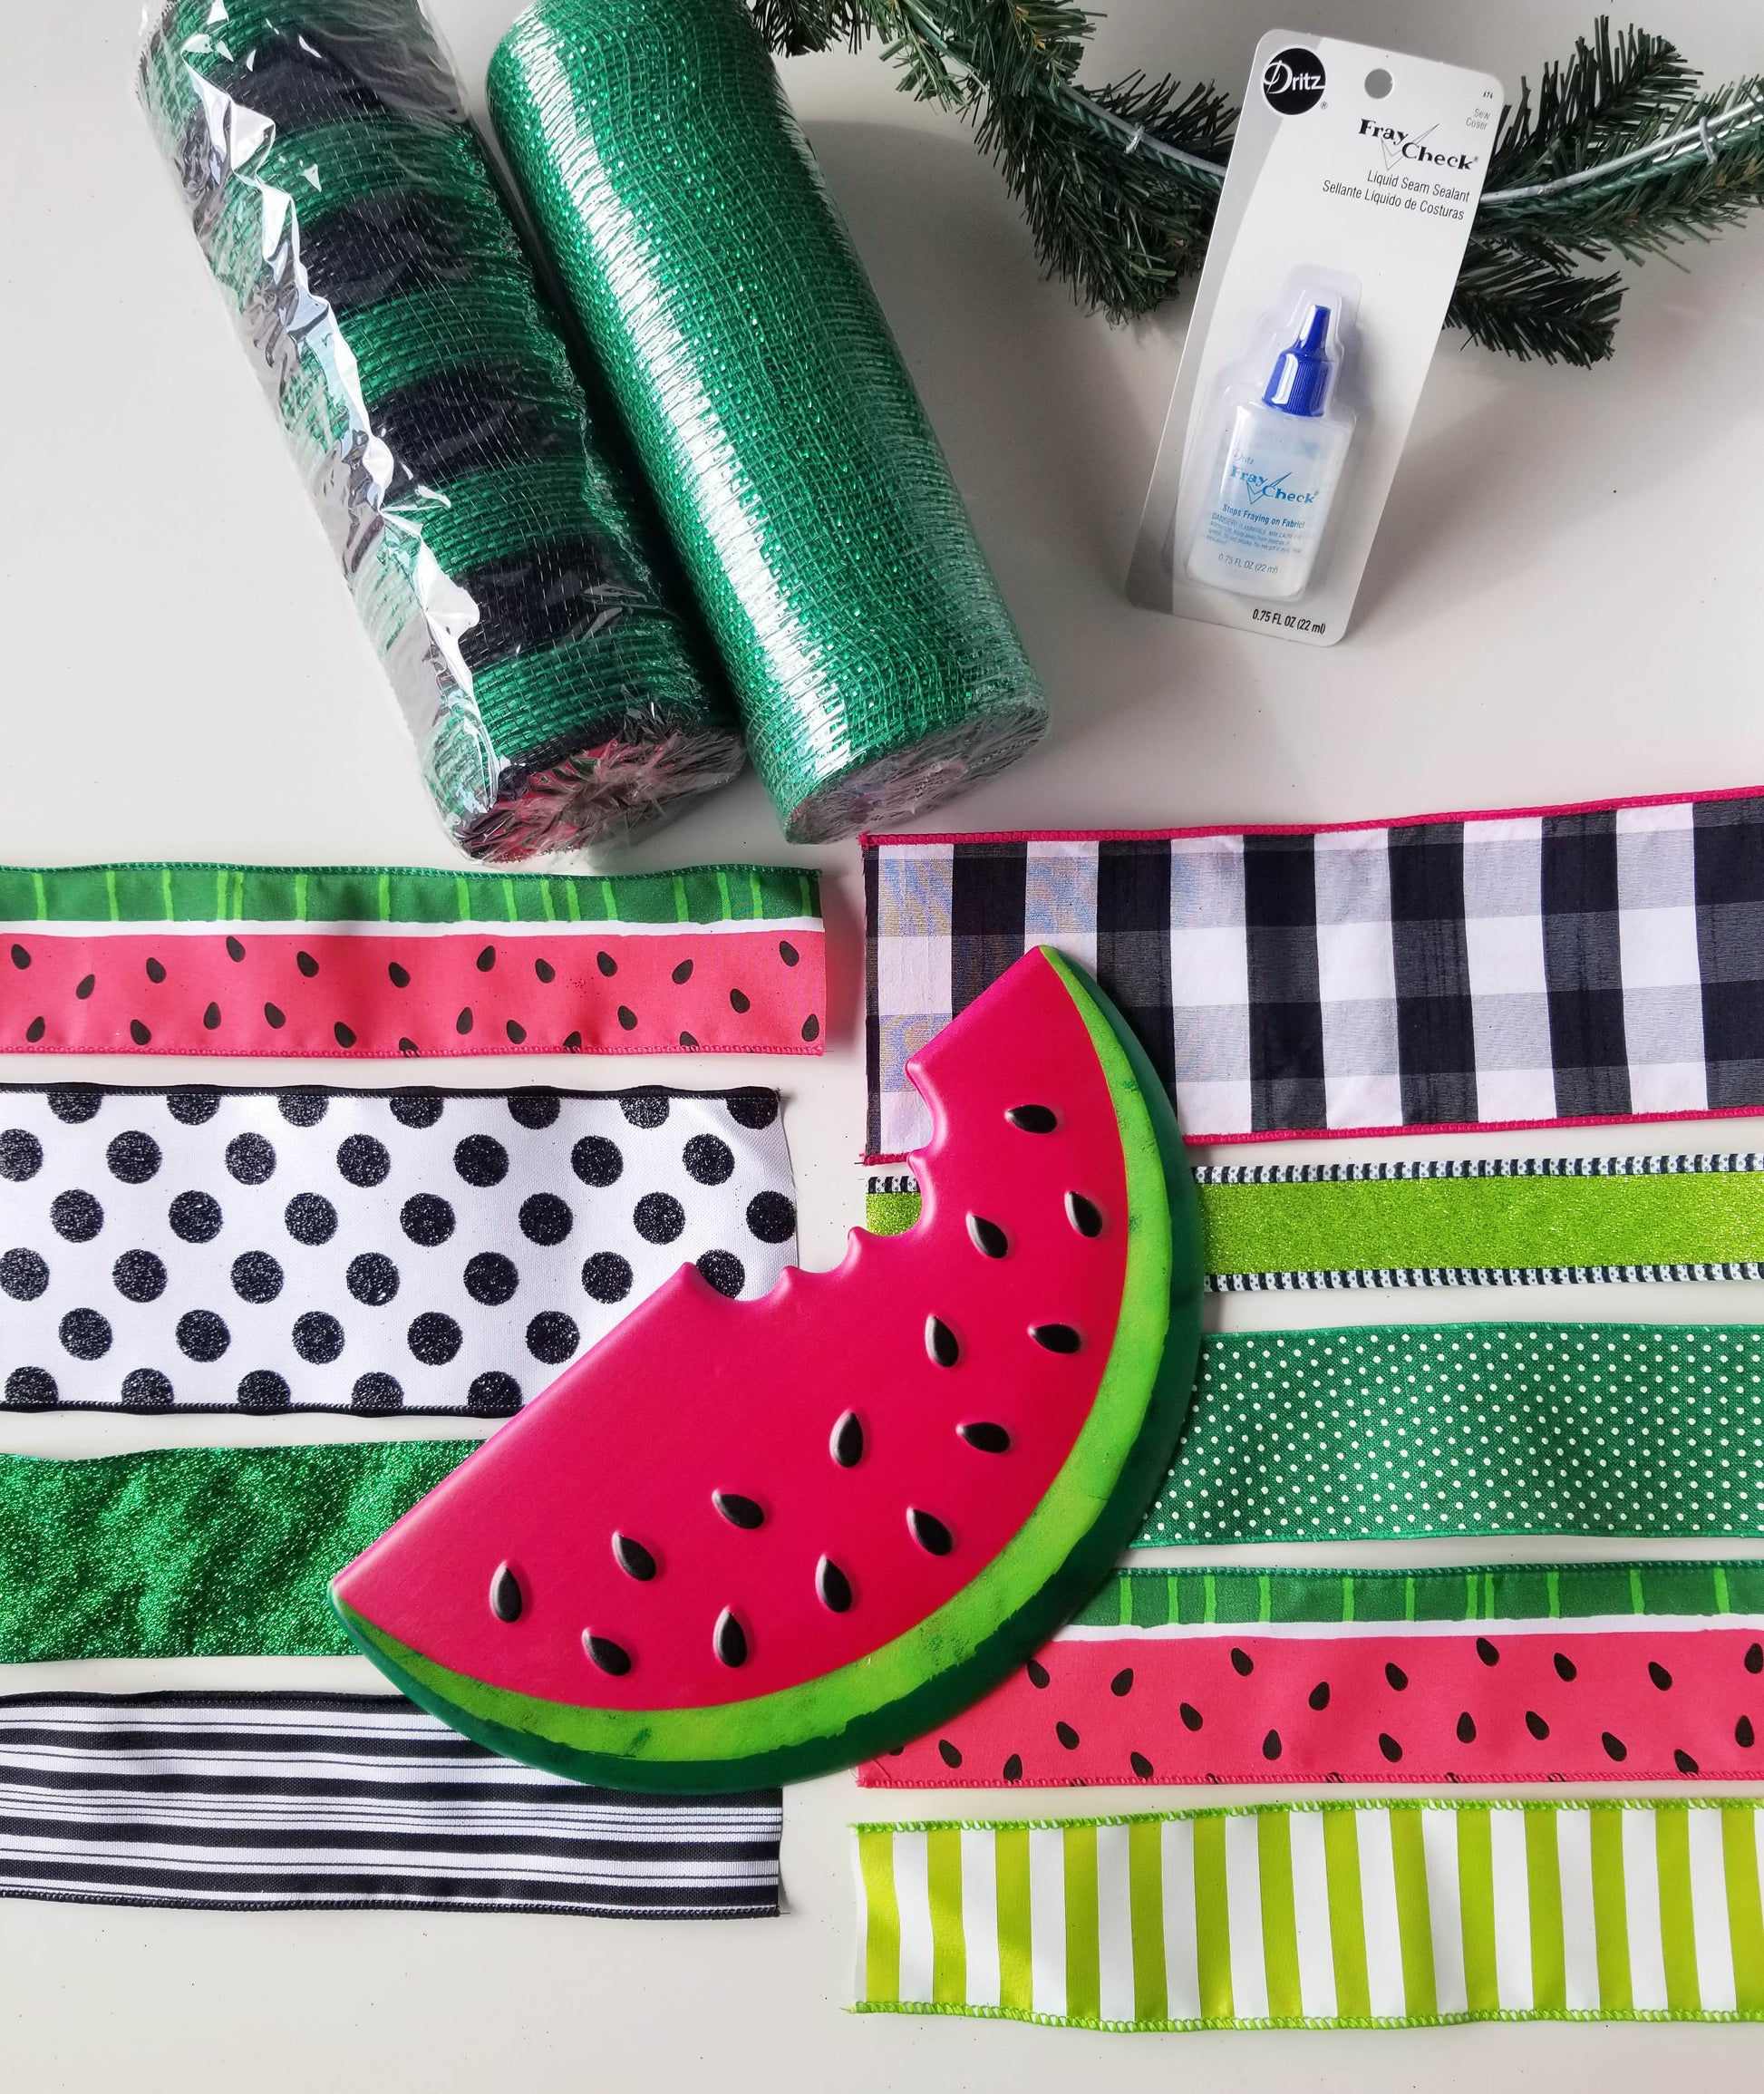 Watermelon Wreath Kit - Designer DIY